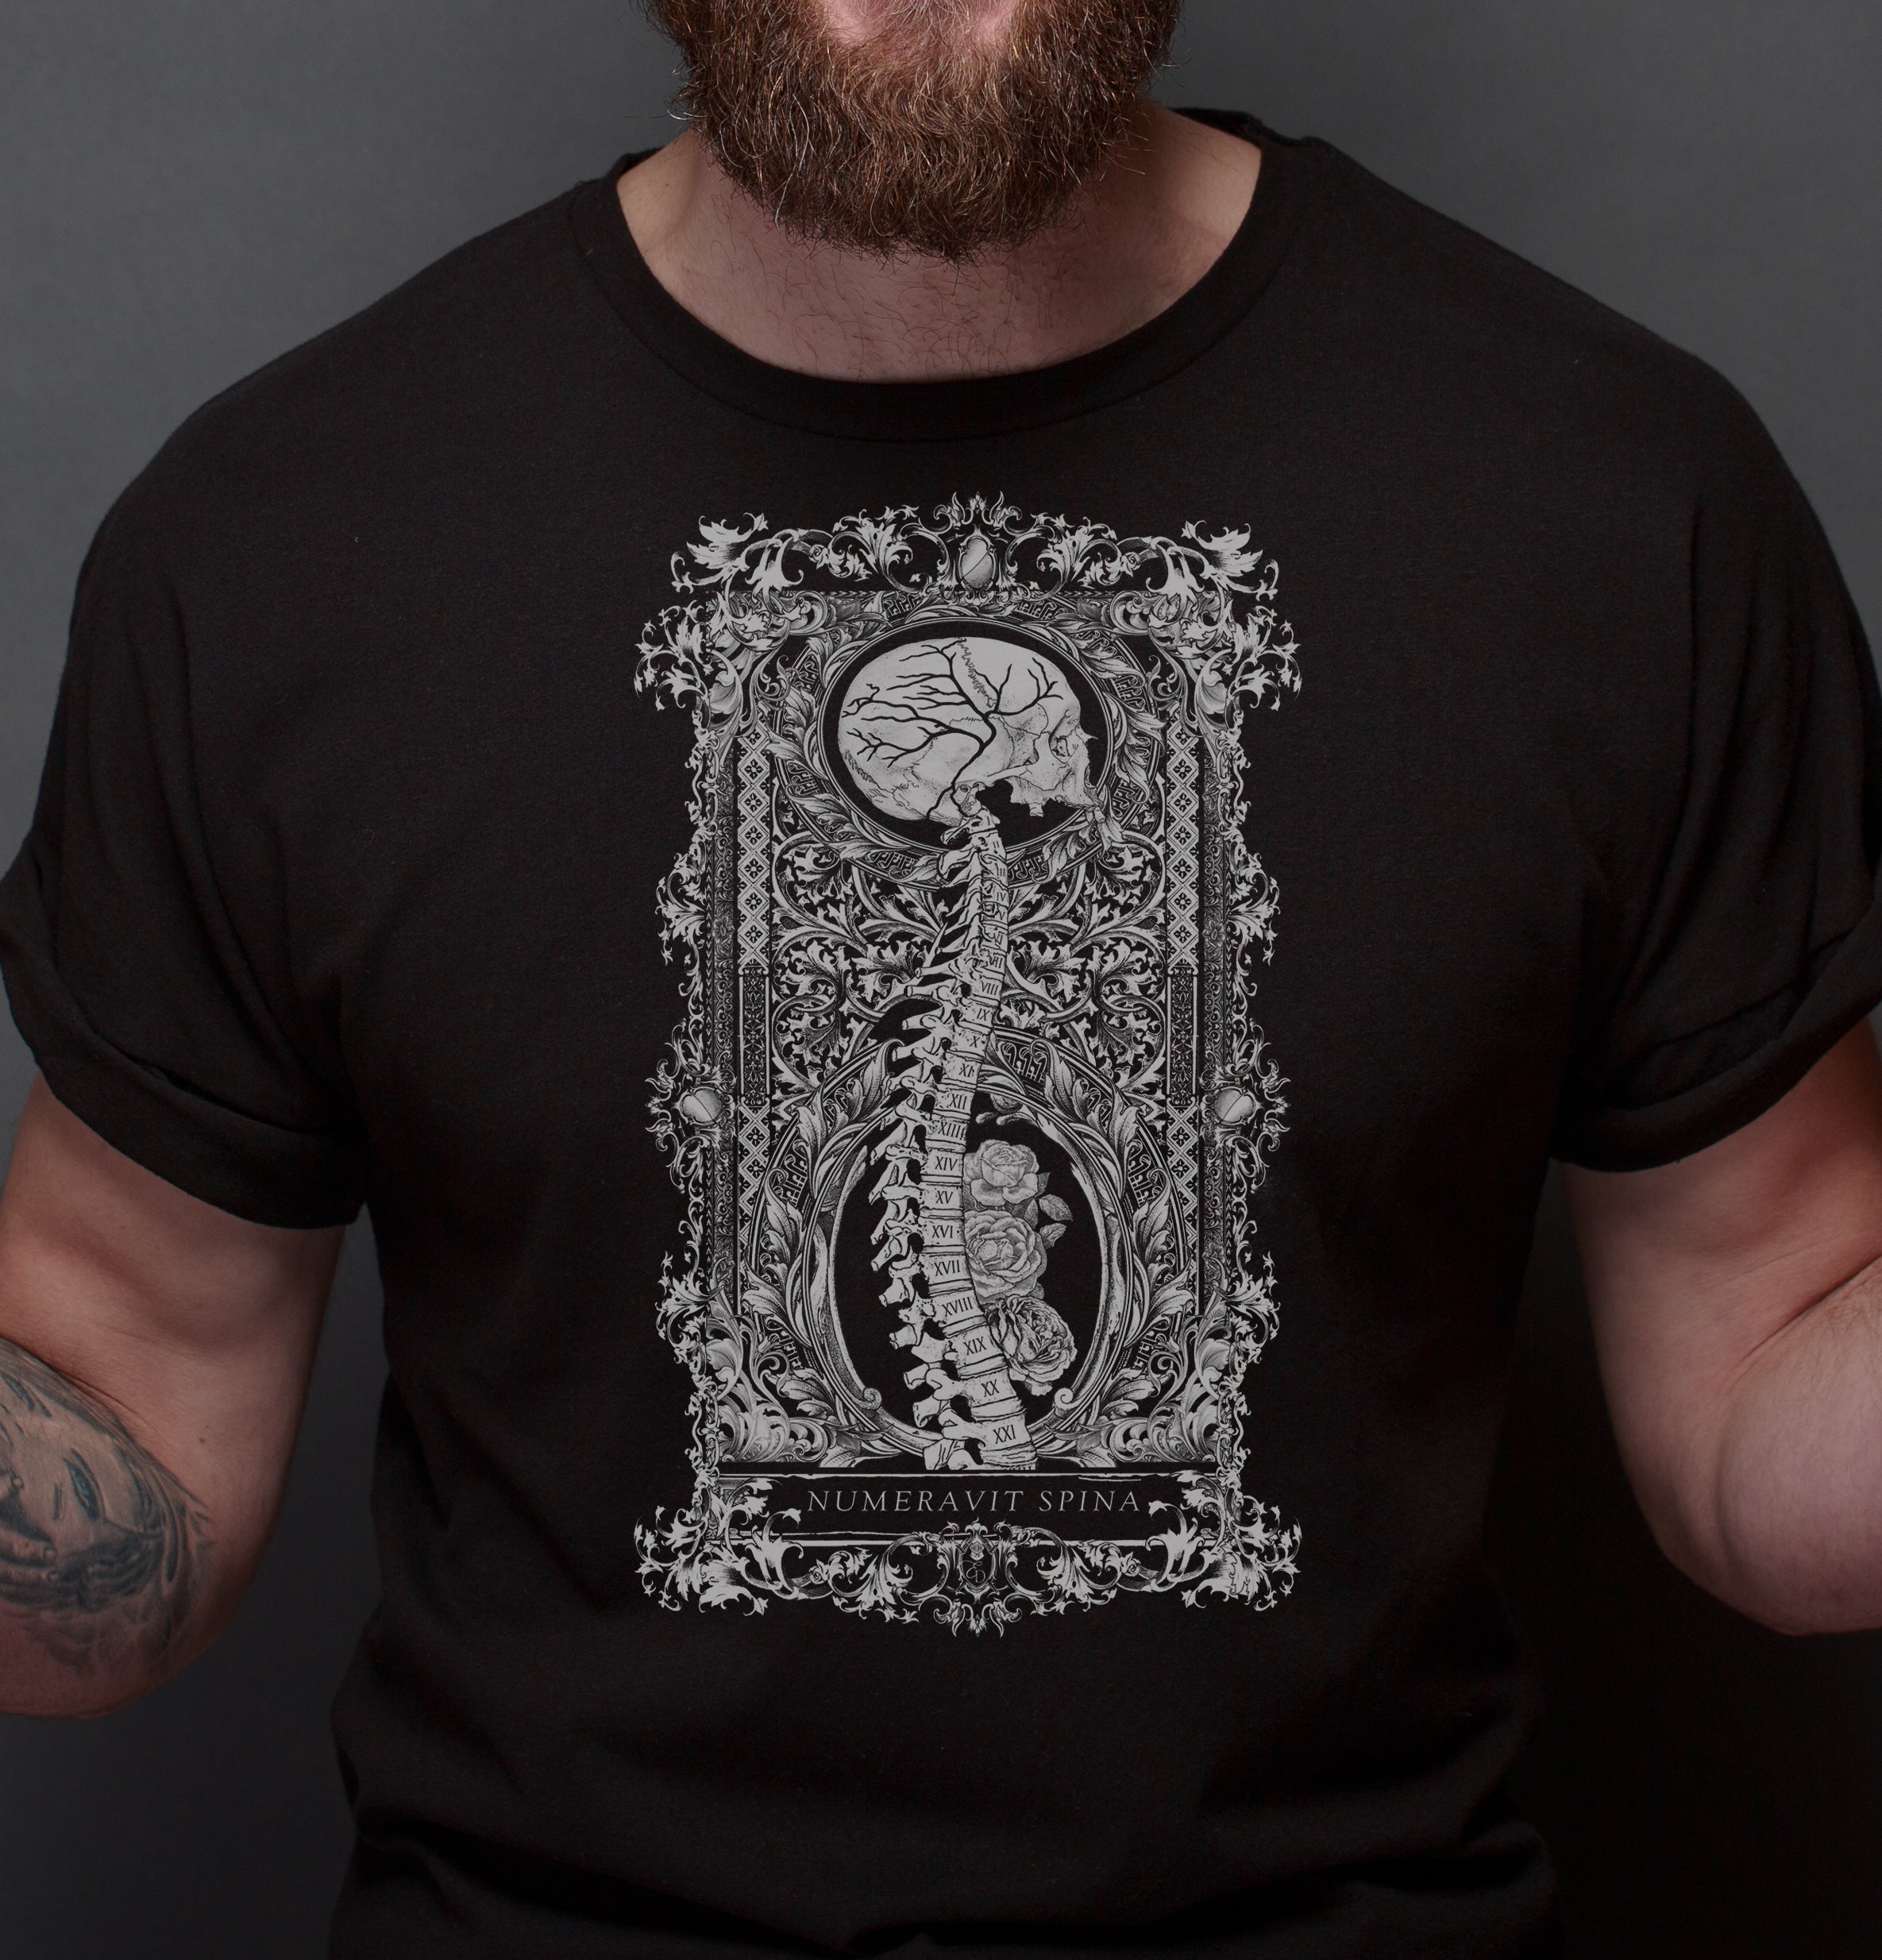 Anatomical Skull & Spine Graphic T Shirt, Black & White Goth Clothing "Spine"